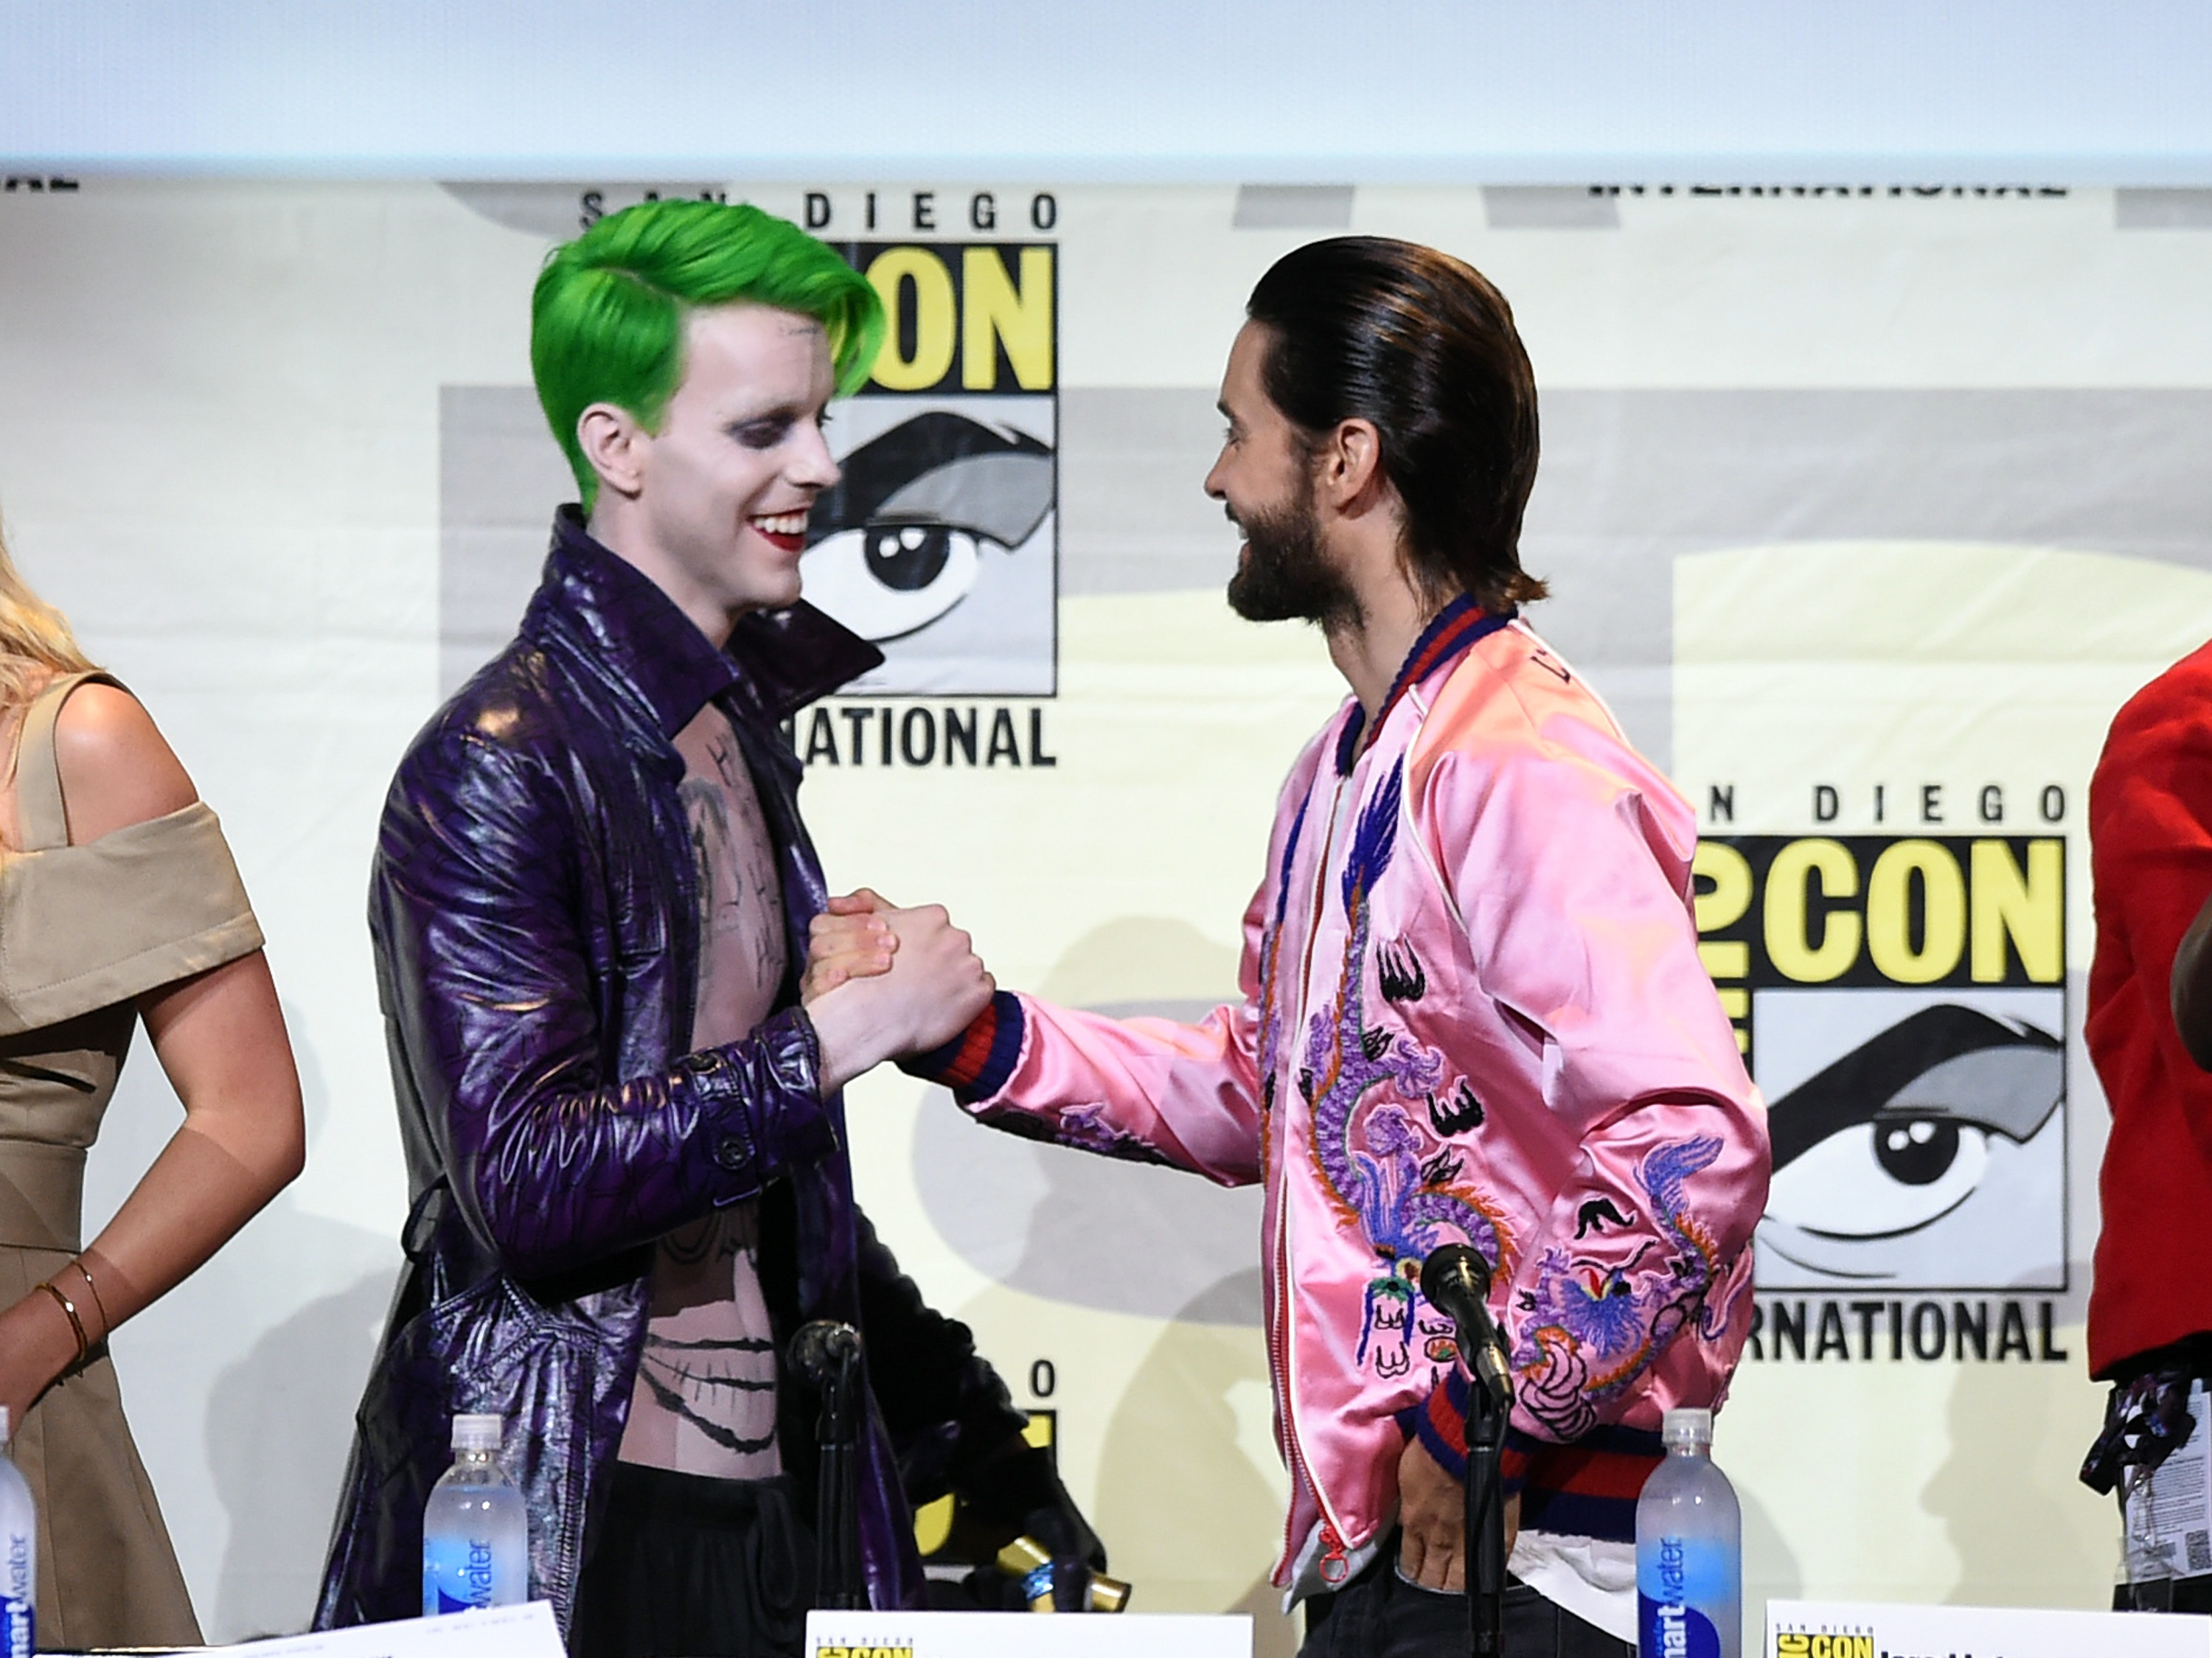 Joker meets Jared Leto